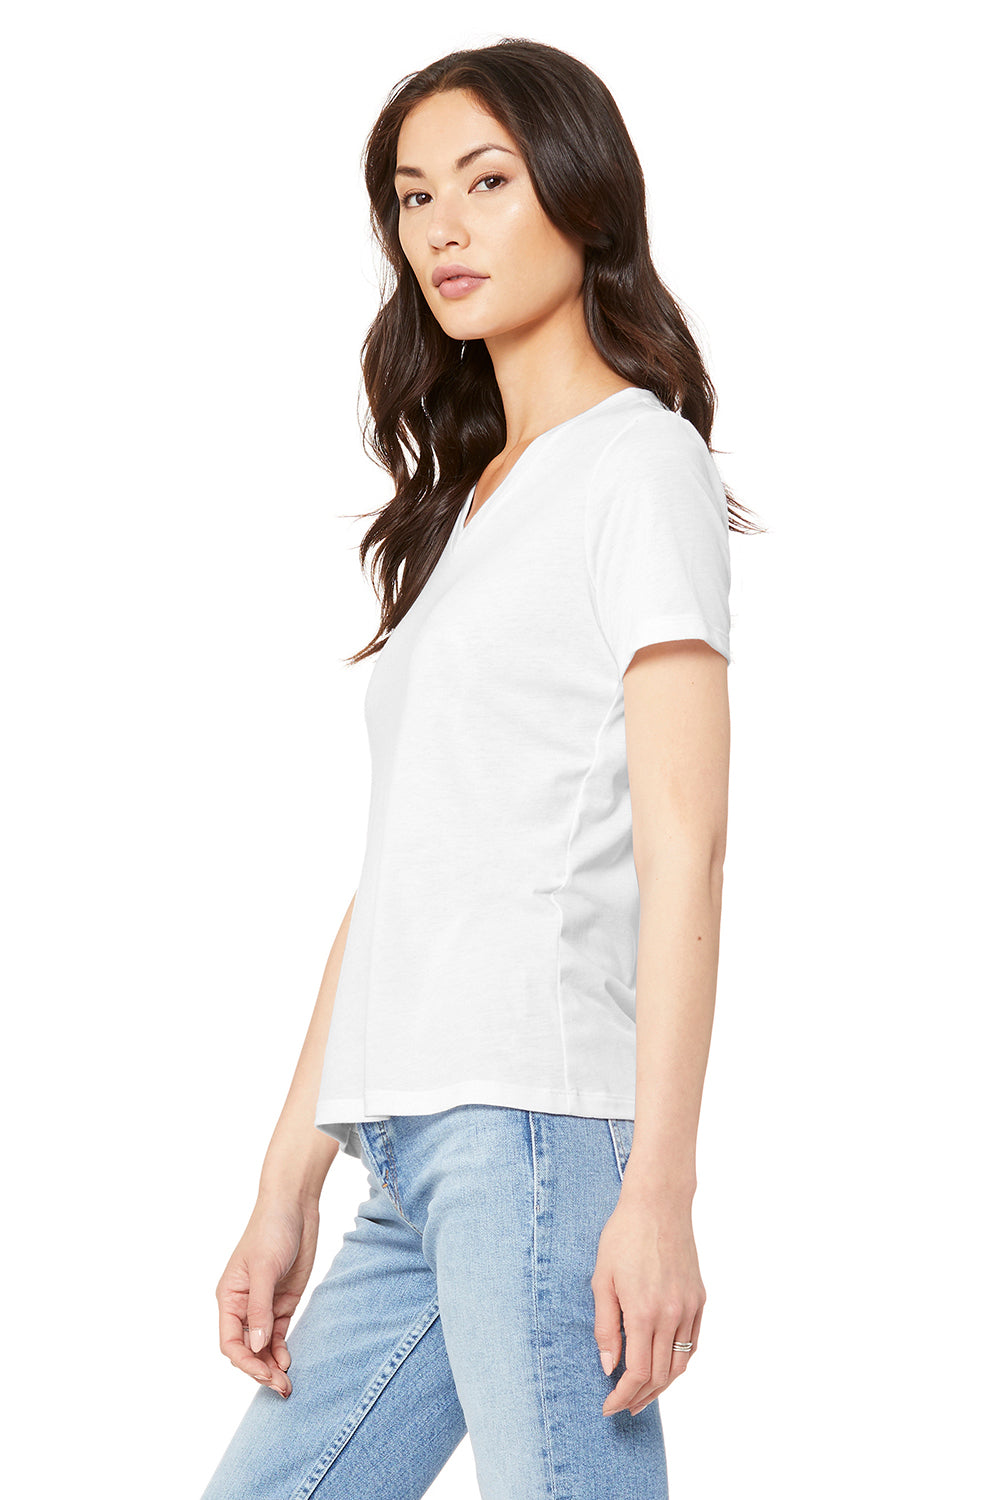 Bella + Canvas BC6415 Womens Short Sleeve V-Neck T-Shirt Solid White Model 3Q